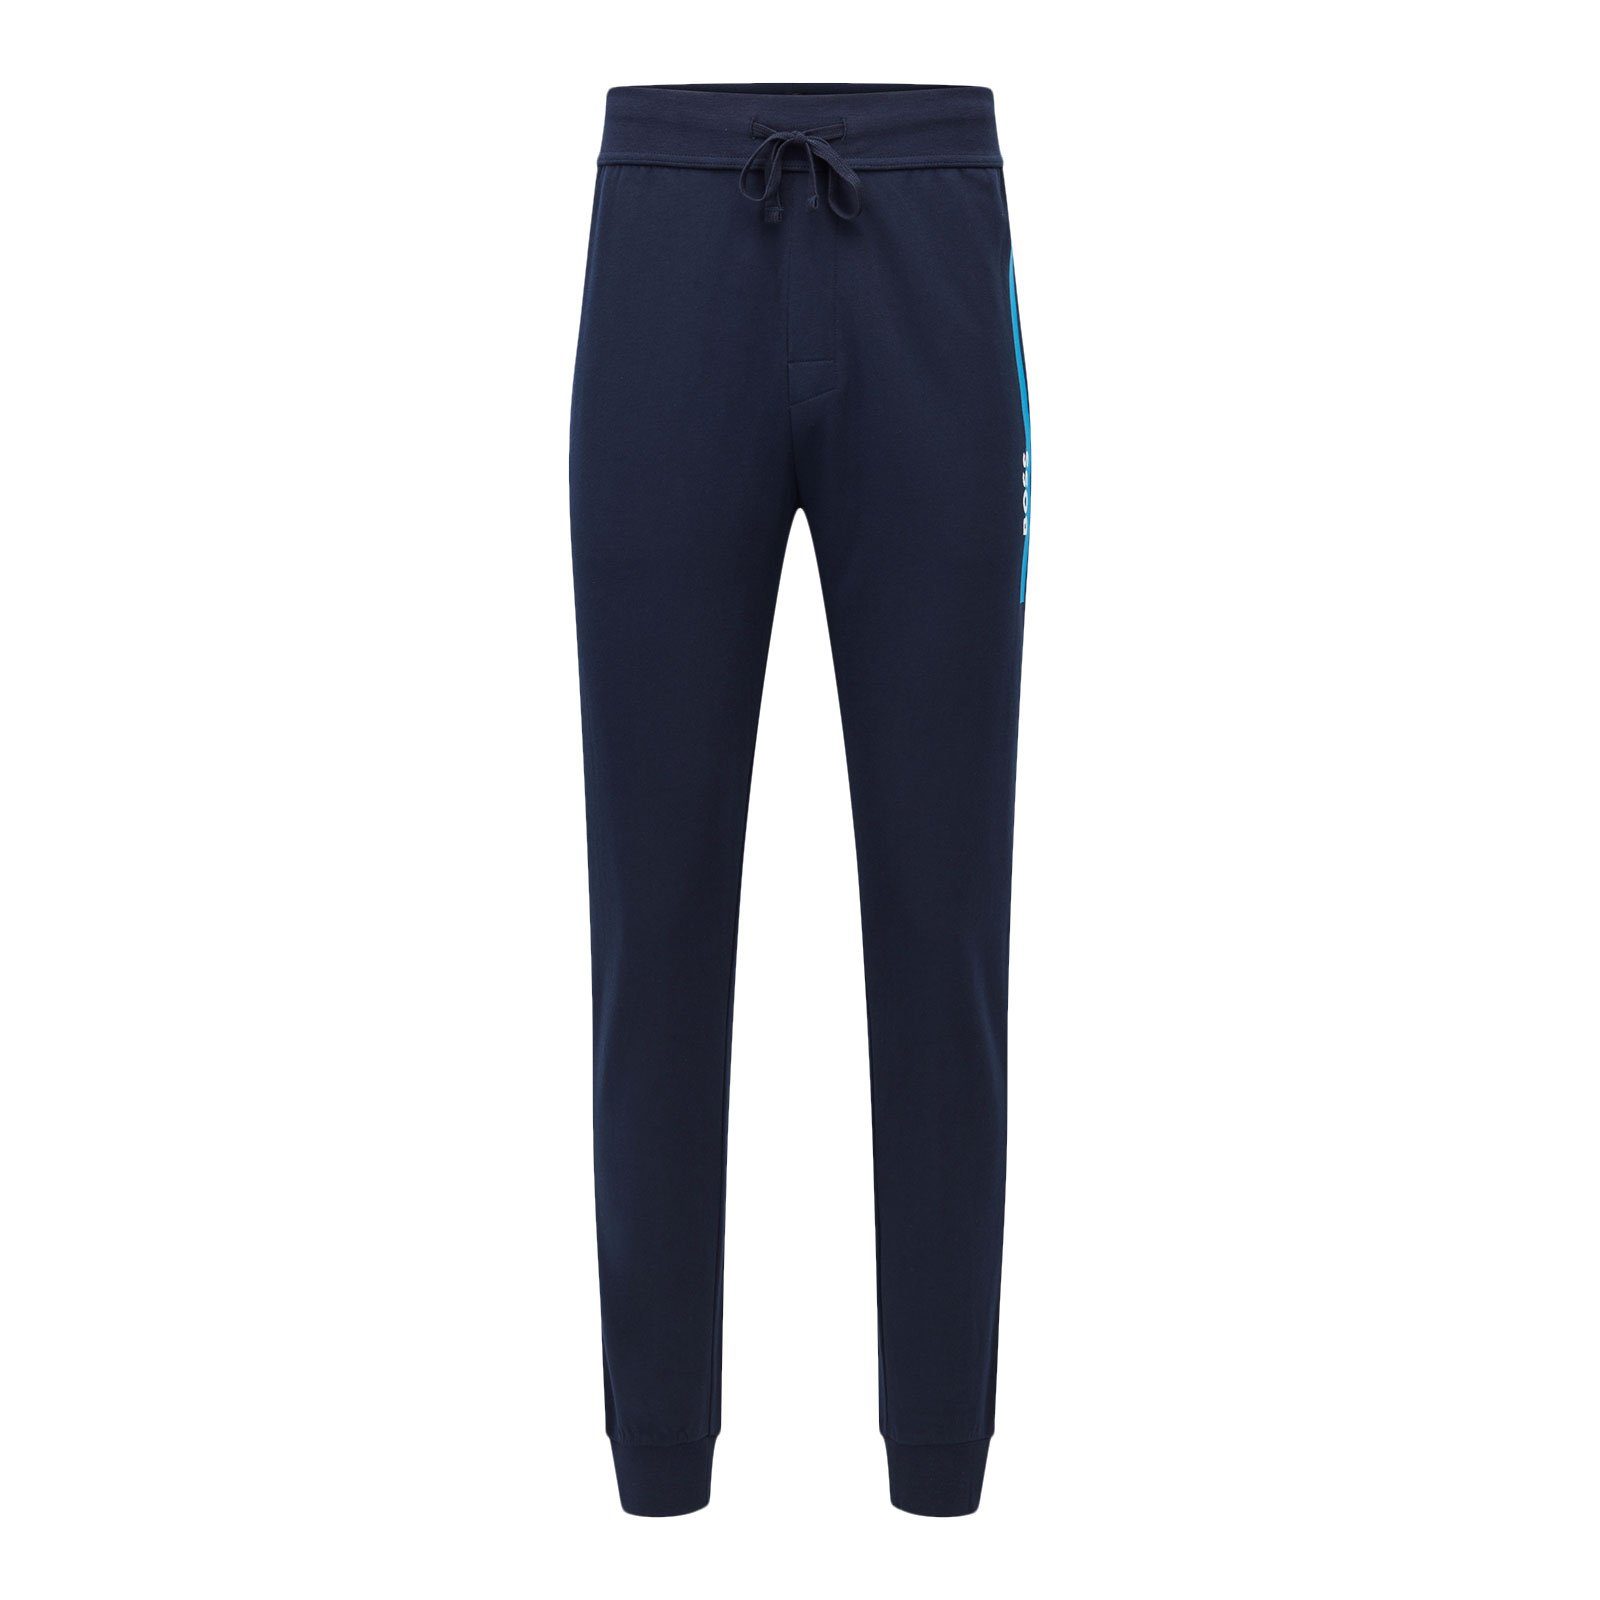 BOSS Jogginghose Authentic Pants mit mittlerer Bundhöhe 403 dark blue